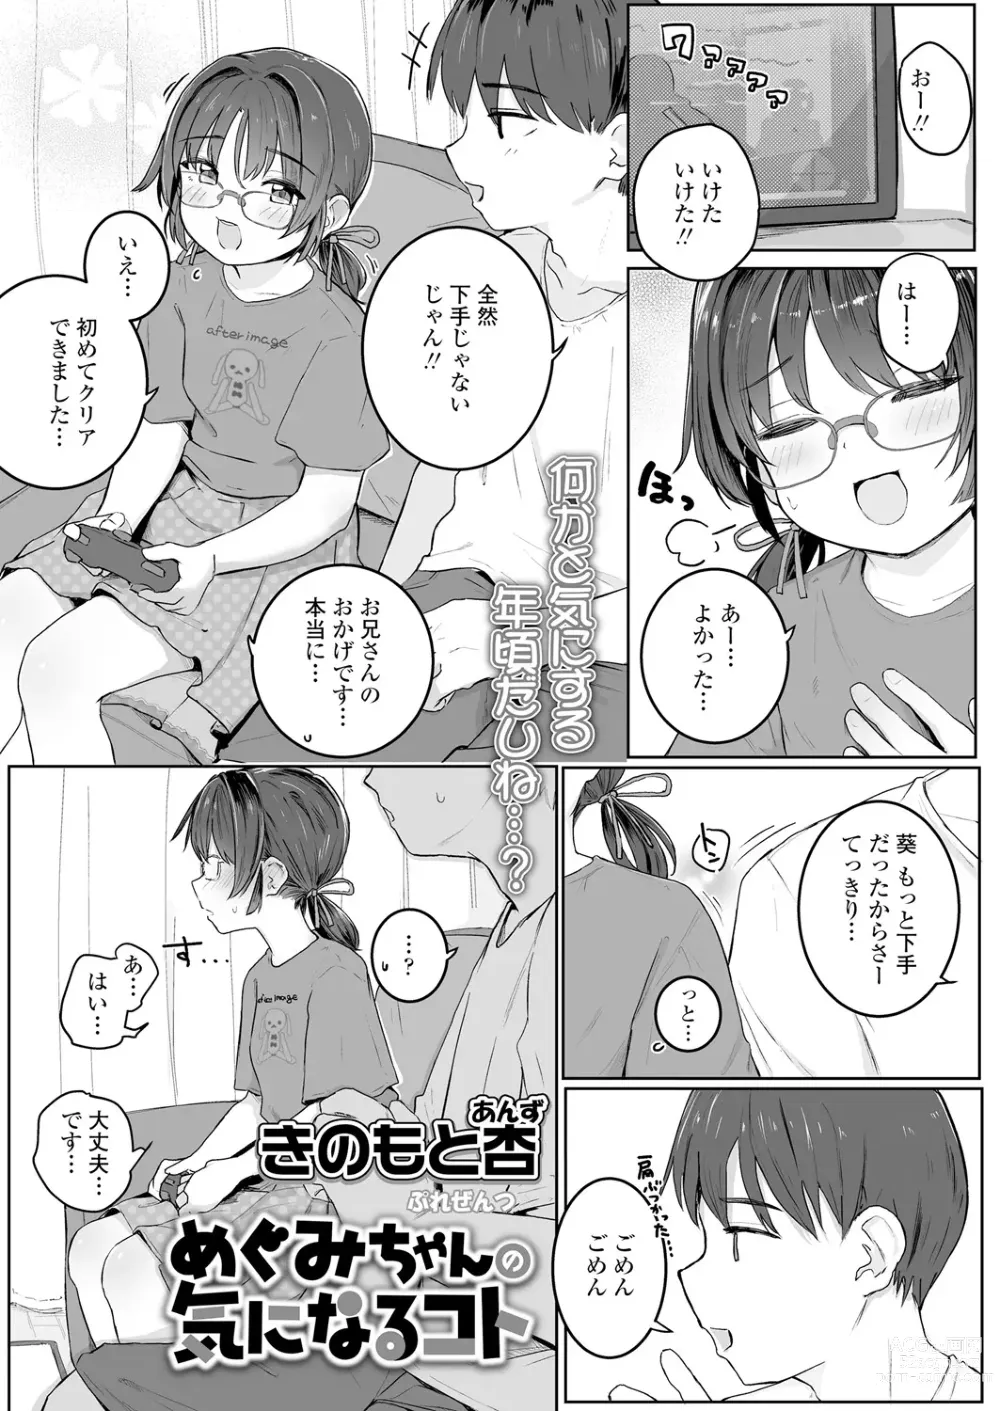 Page 3 of manga めぐみちゃんの気になるコト